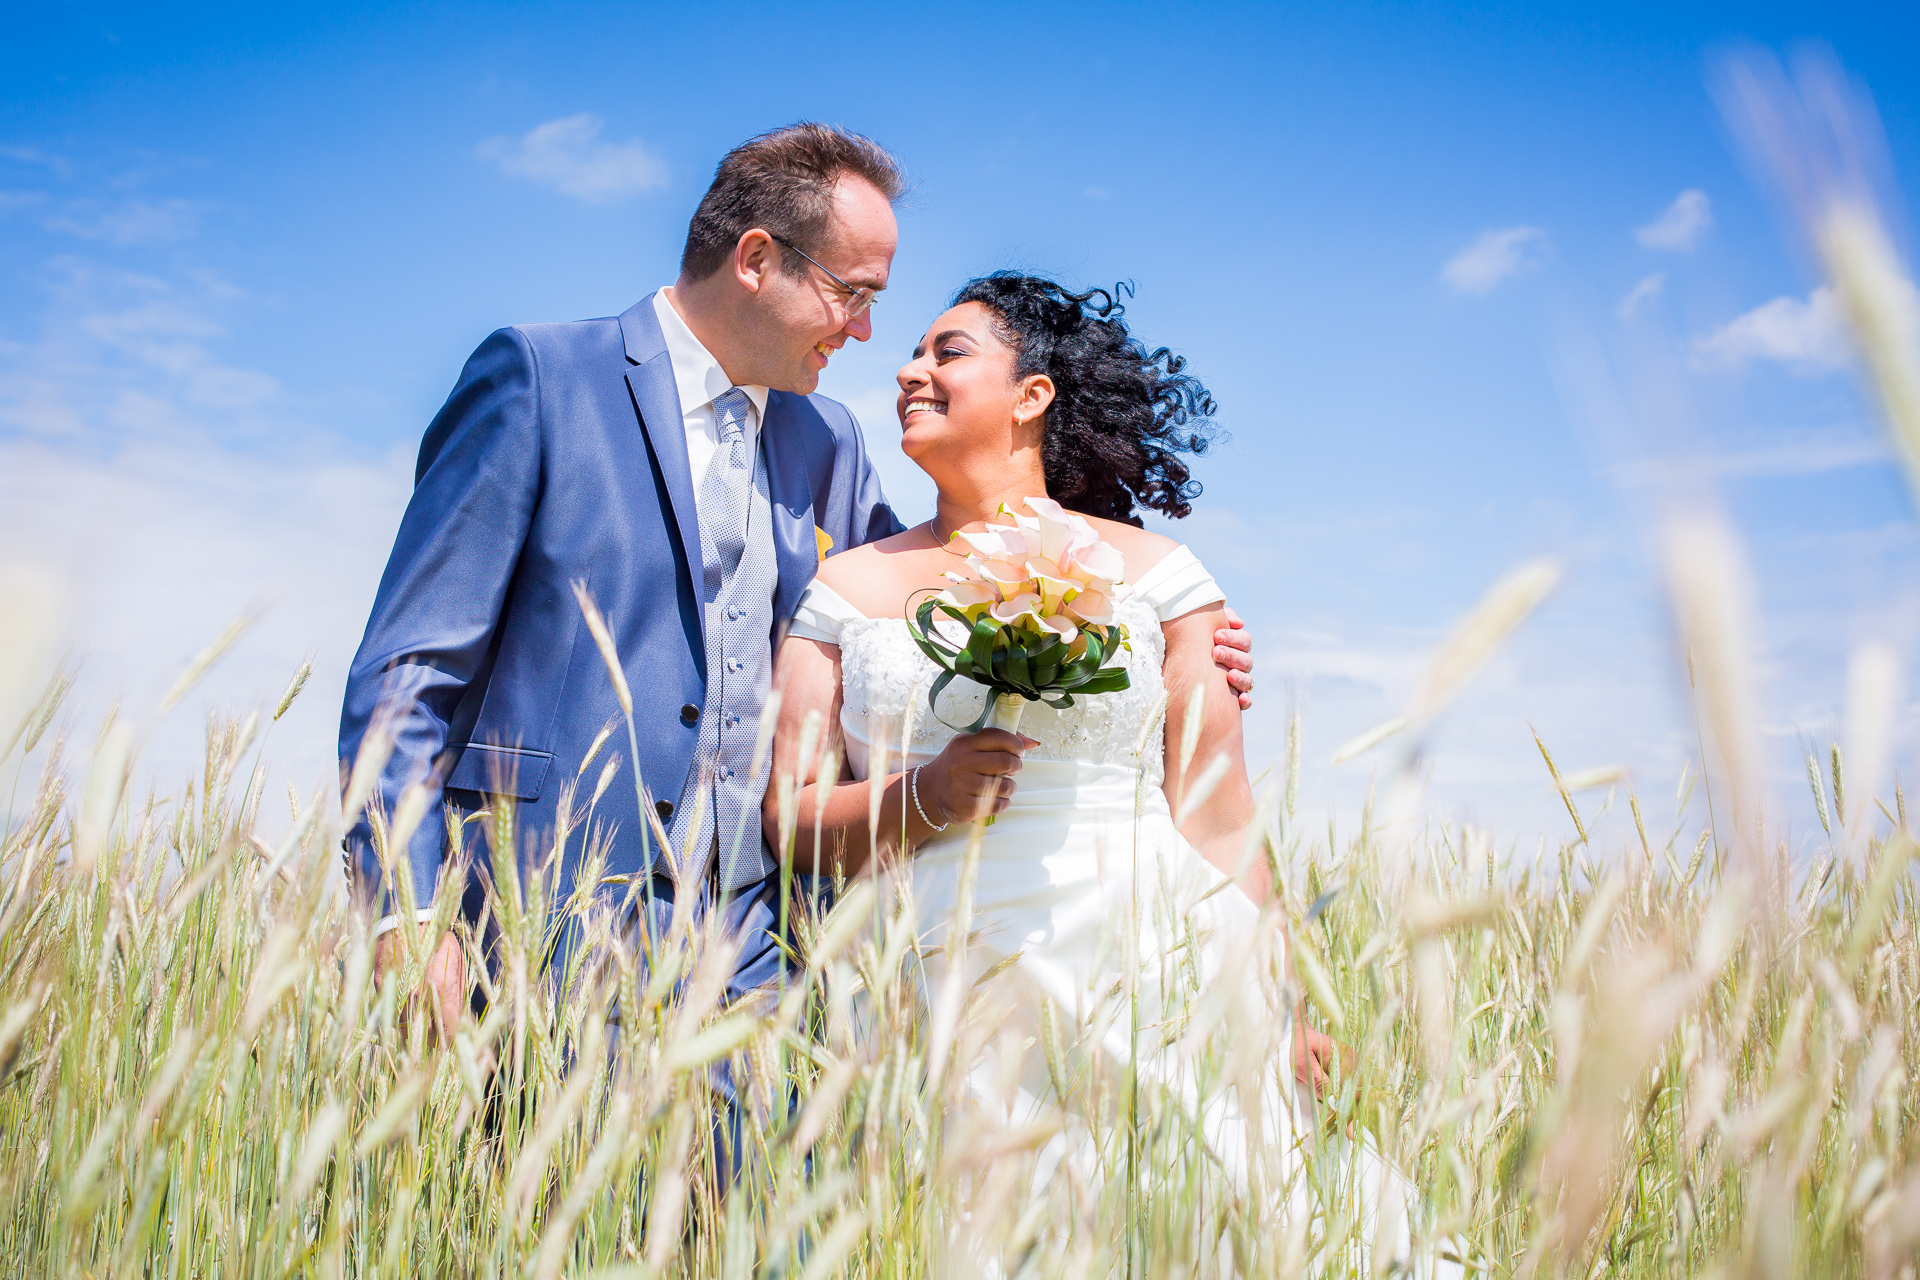  Wedding couple enjoying their photoshoot in the Dutch wheat fields     May, 2015   